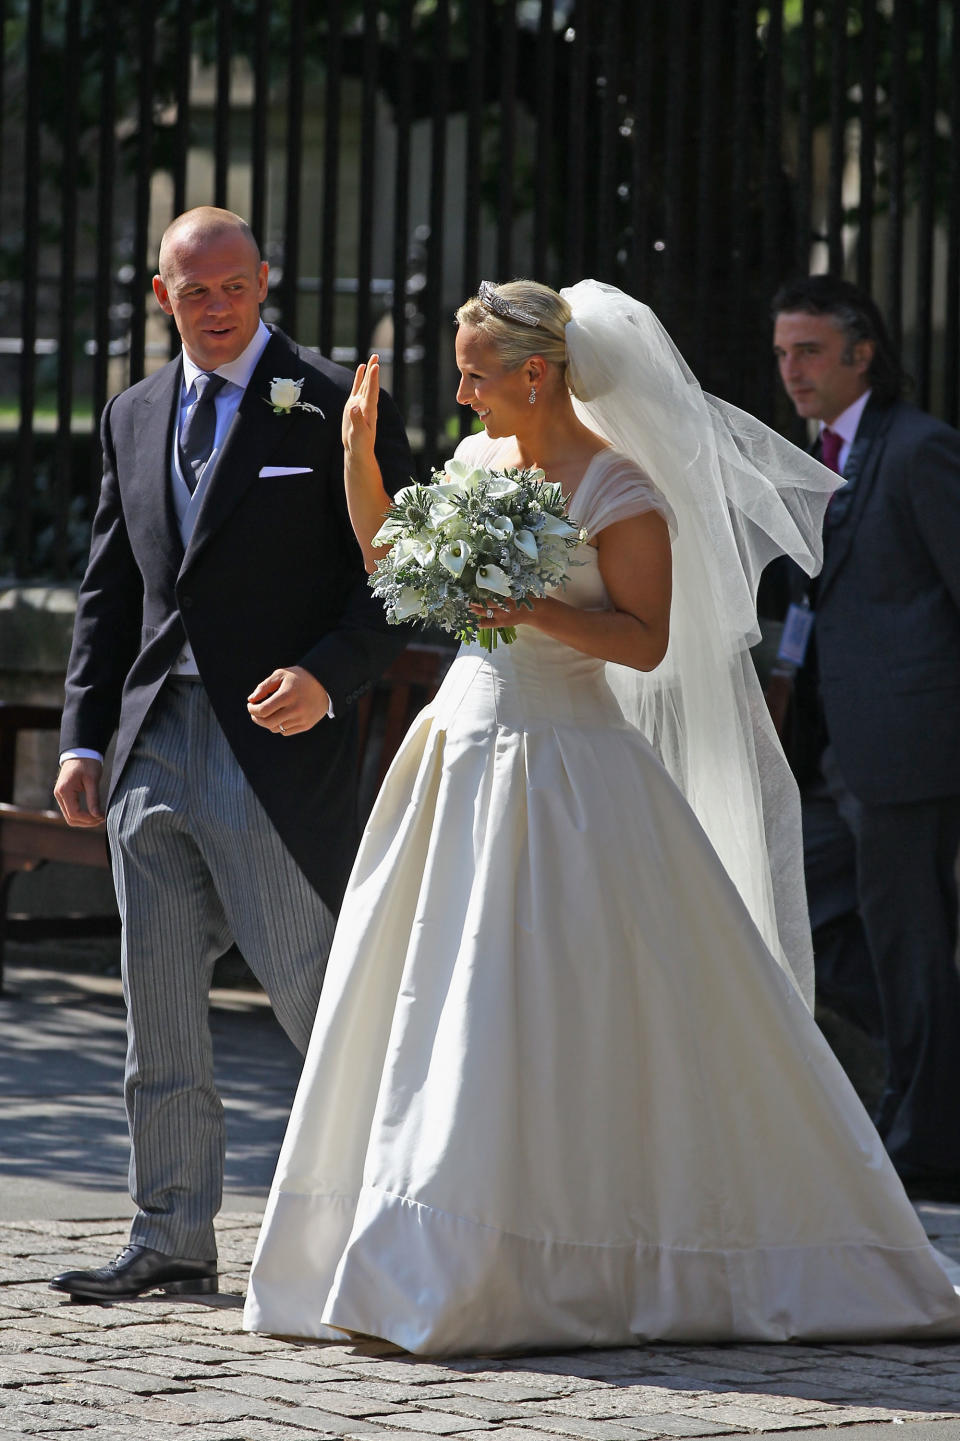 royal wedding gowns Zara phillips